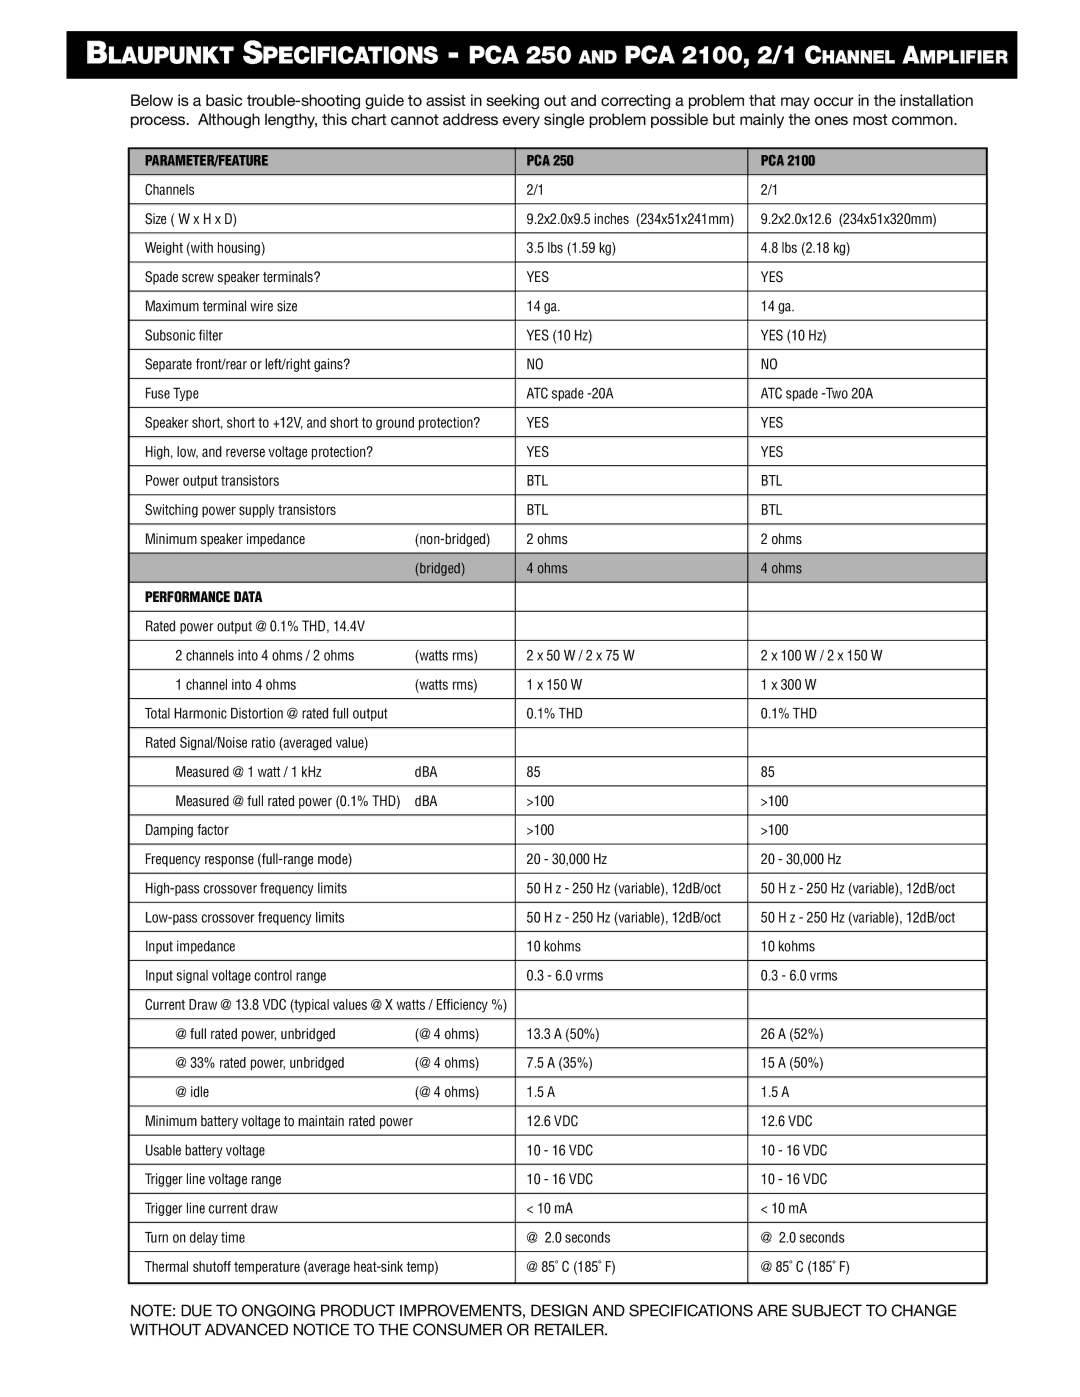 Blaupunkt PCA 2100, PCA 250 manual Parameter/Feature 